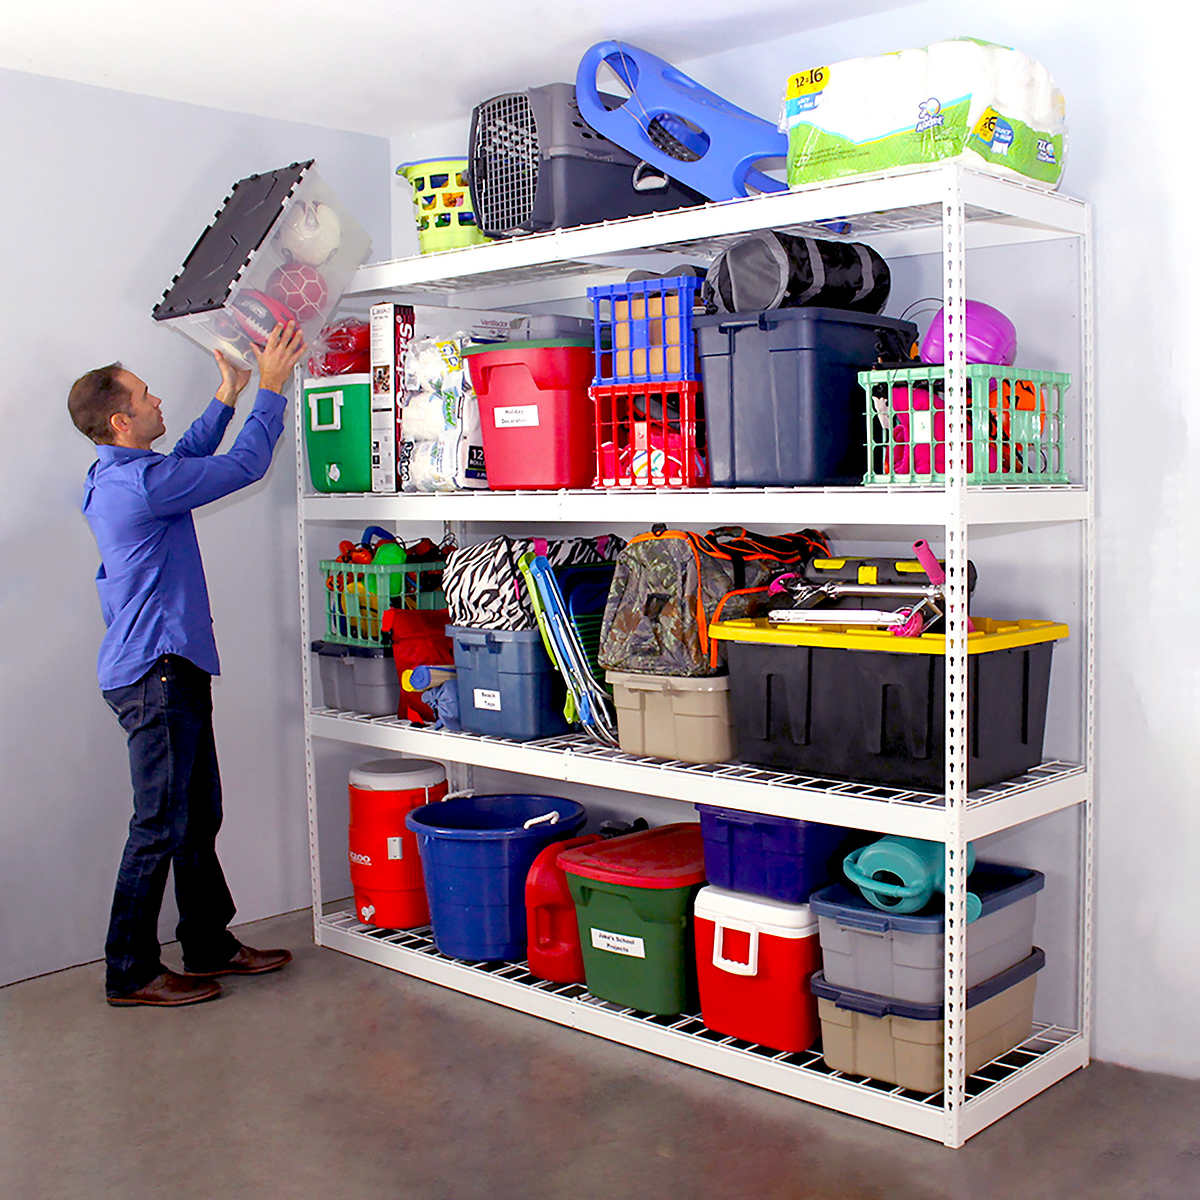 Saferacks Garage Shelving Costco, How To Build Free Standing Garage Shelves